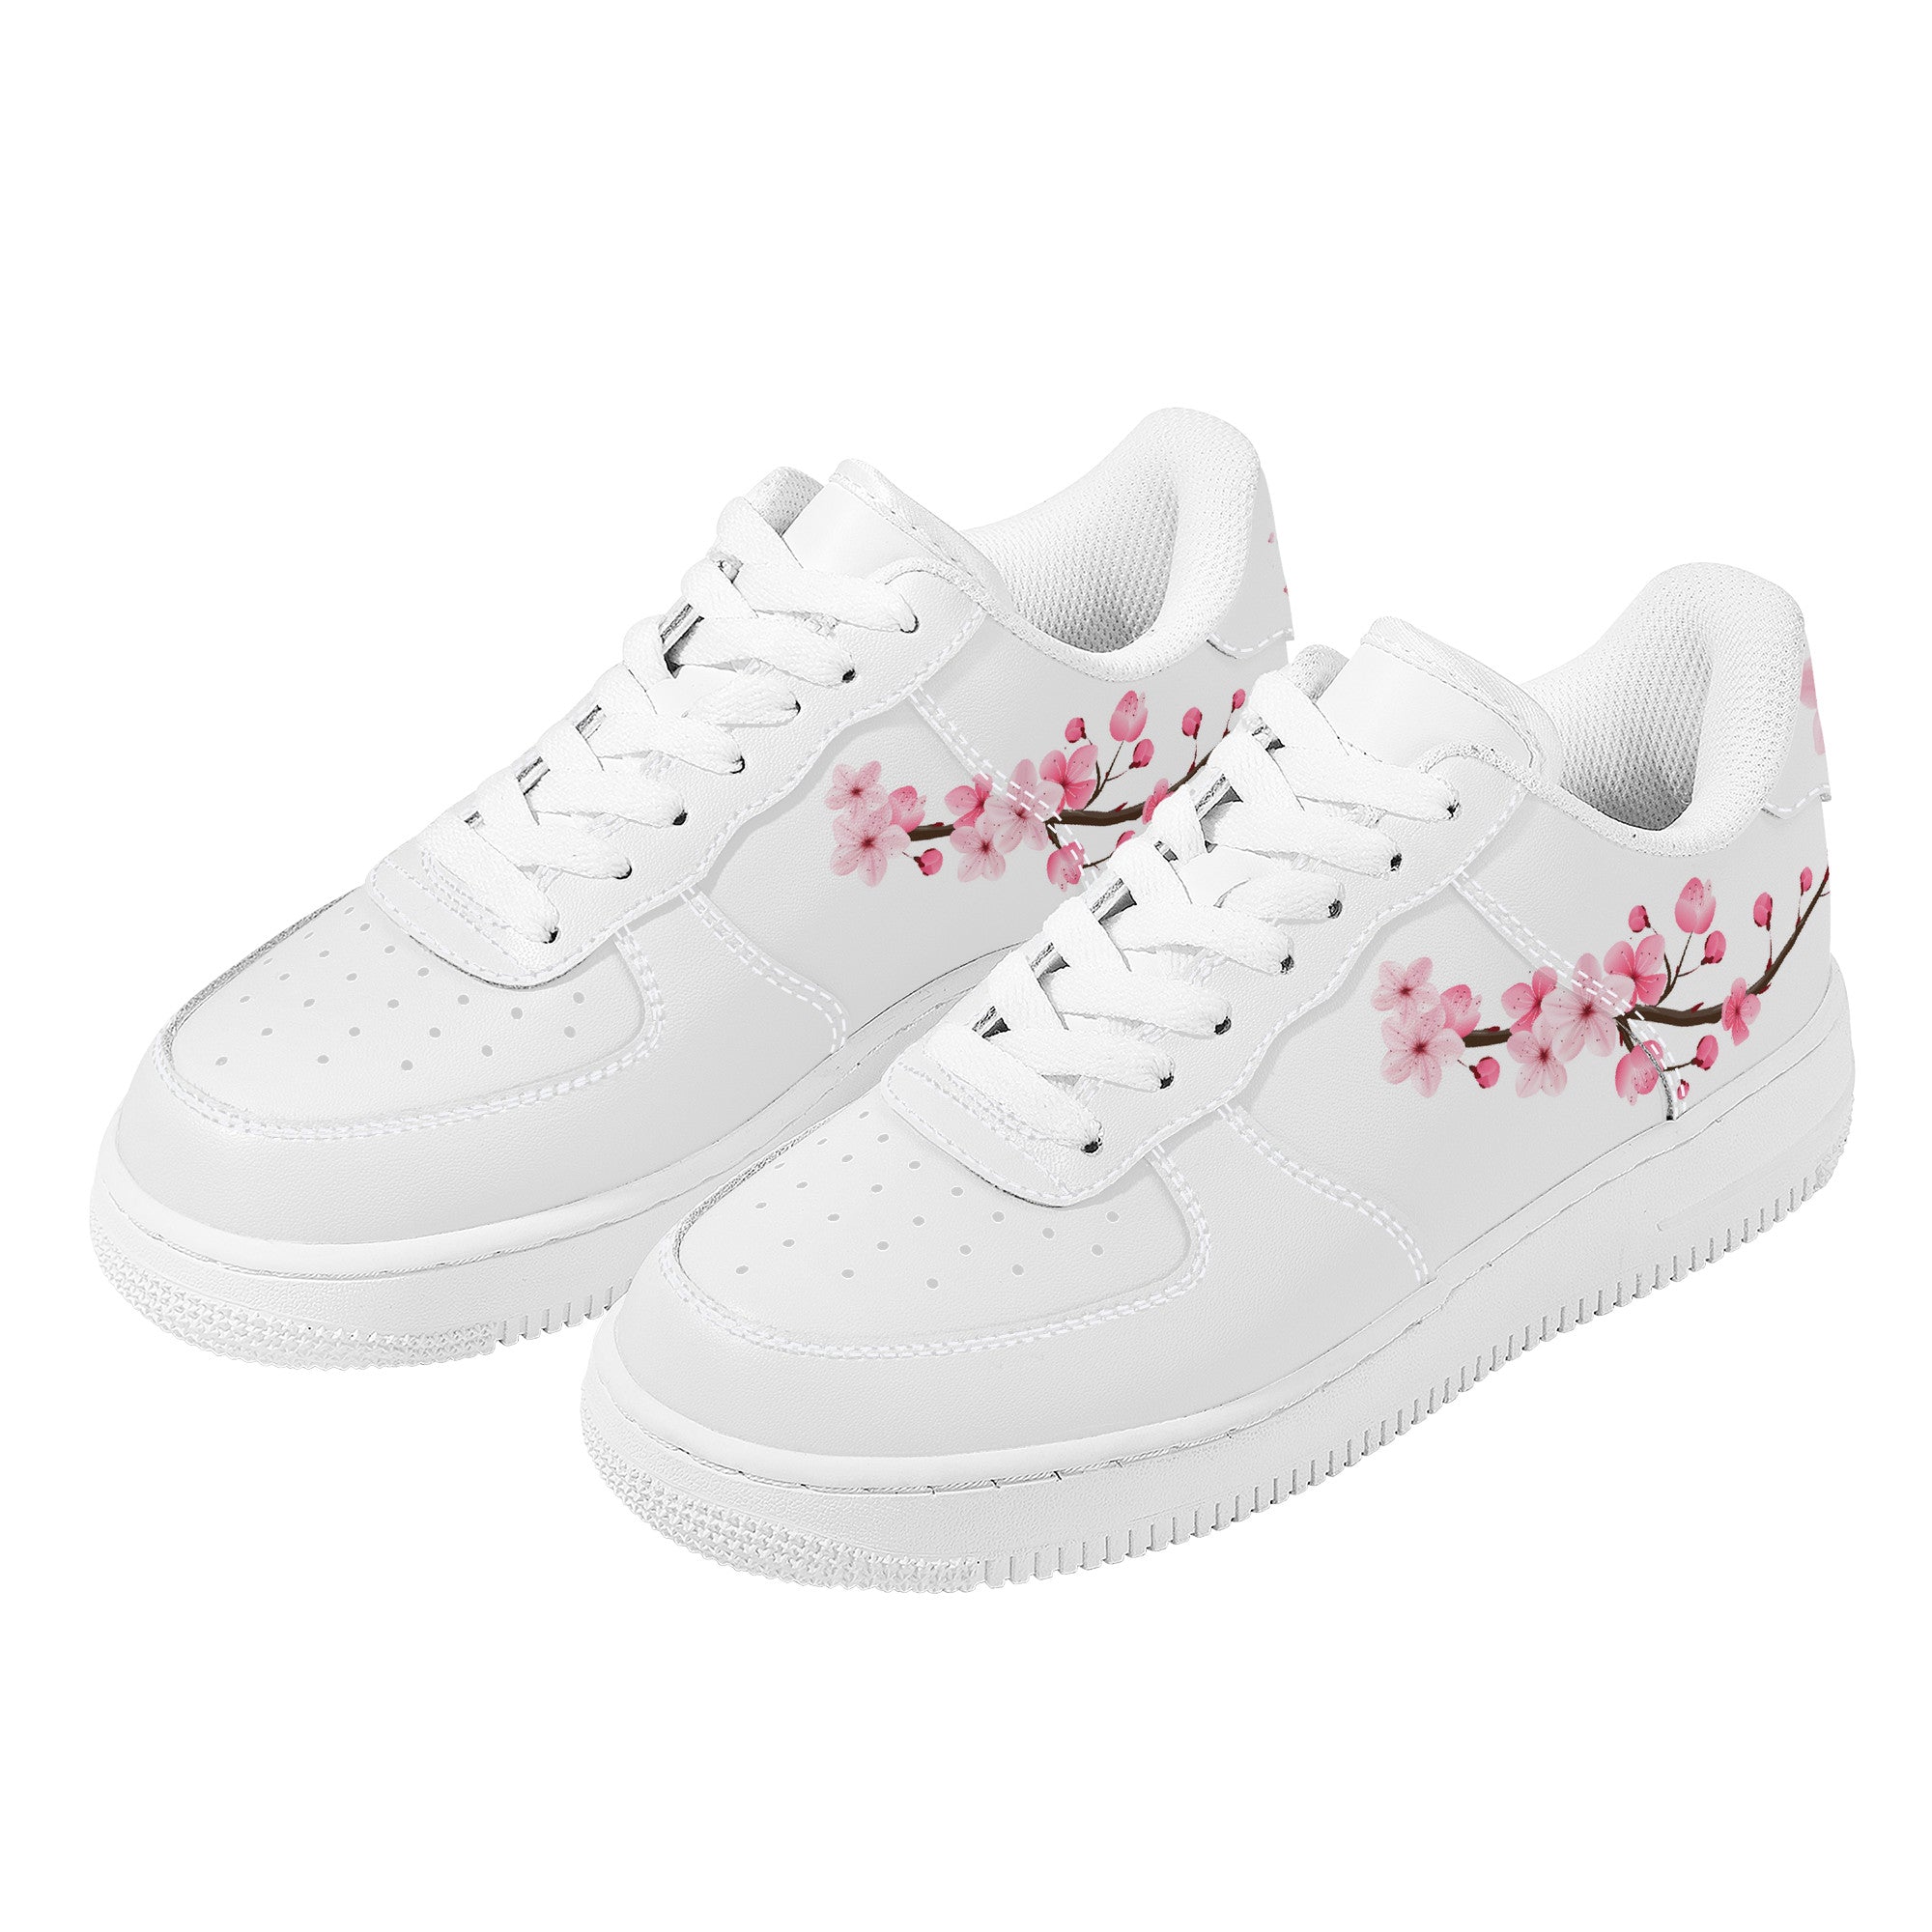 Cherry Blossom Sakura Low Top Unisex Sneakers